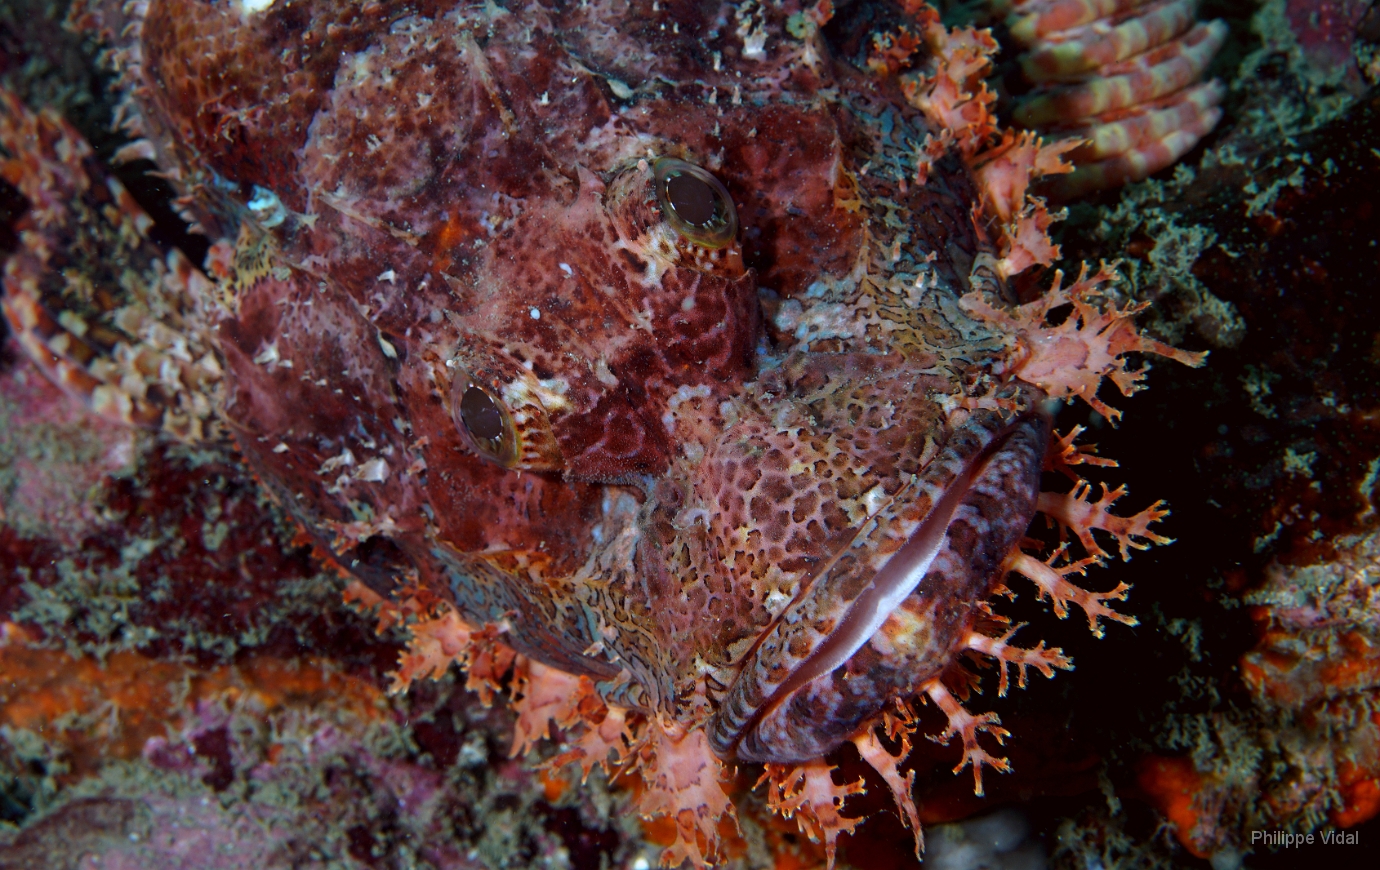 Birmanie - Mergui - 2018 - DSC02598 - Tasseled scorpionfish - Poisson scorpion a houpe - Scorpaenopsis oxycephala.JPG